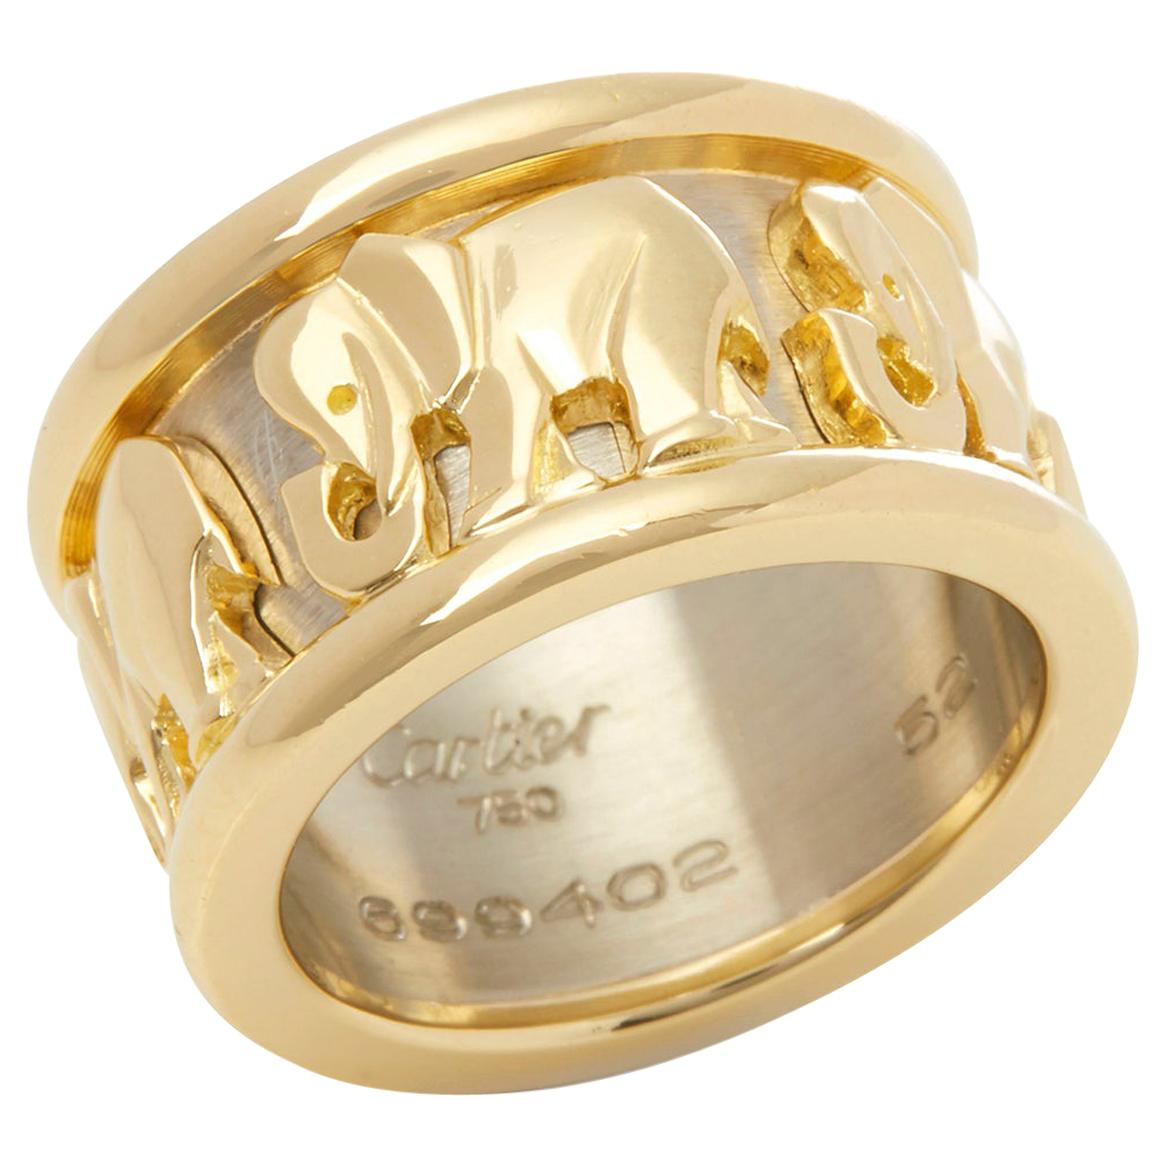 Cartier 18 Karat Yellow and White Gold Pharaon Elephant Band Ring 